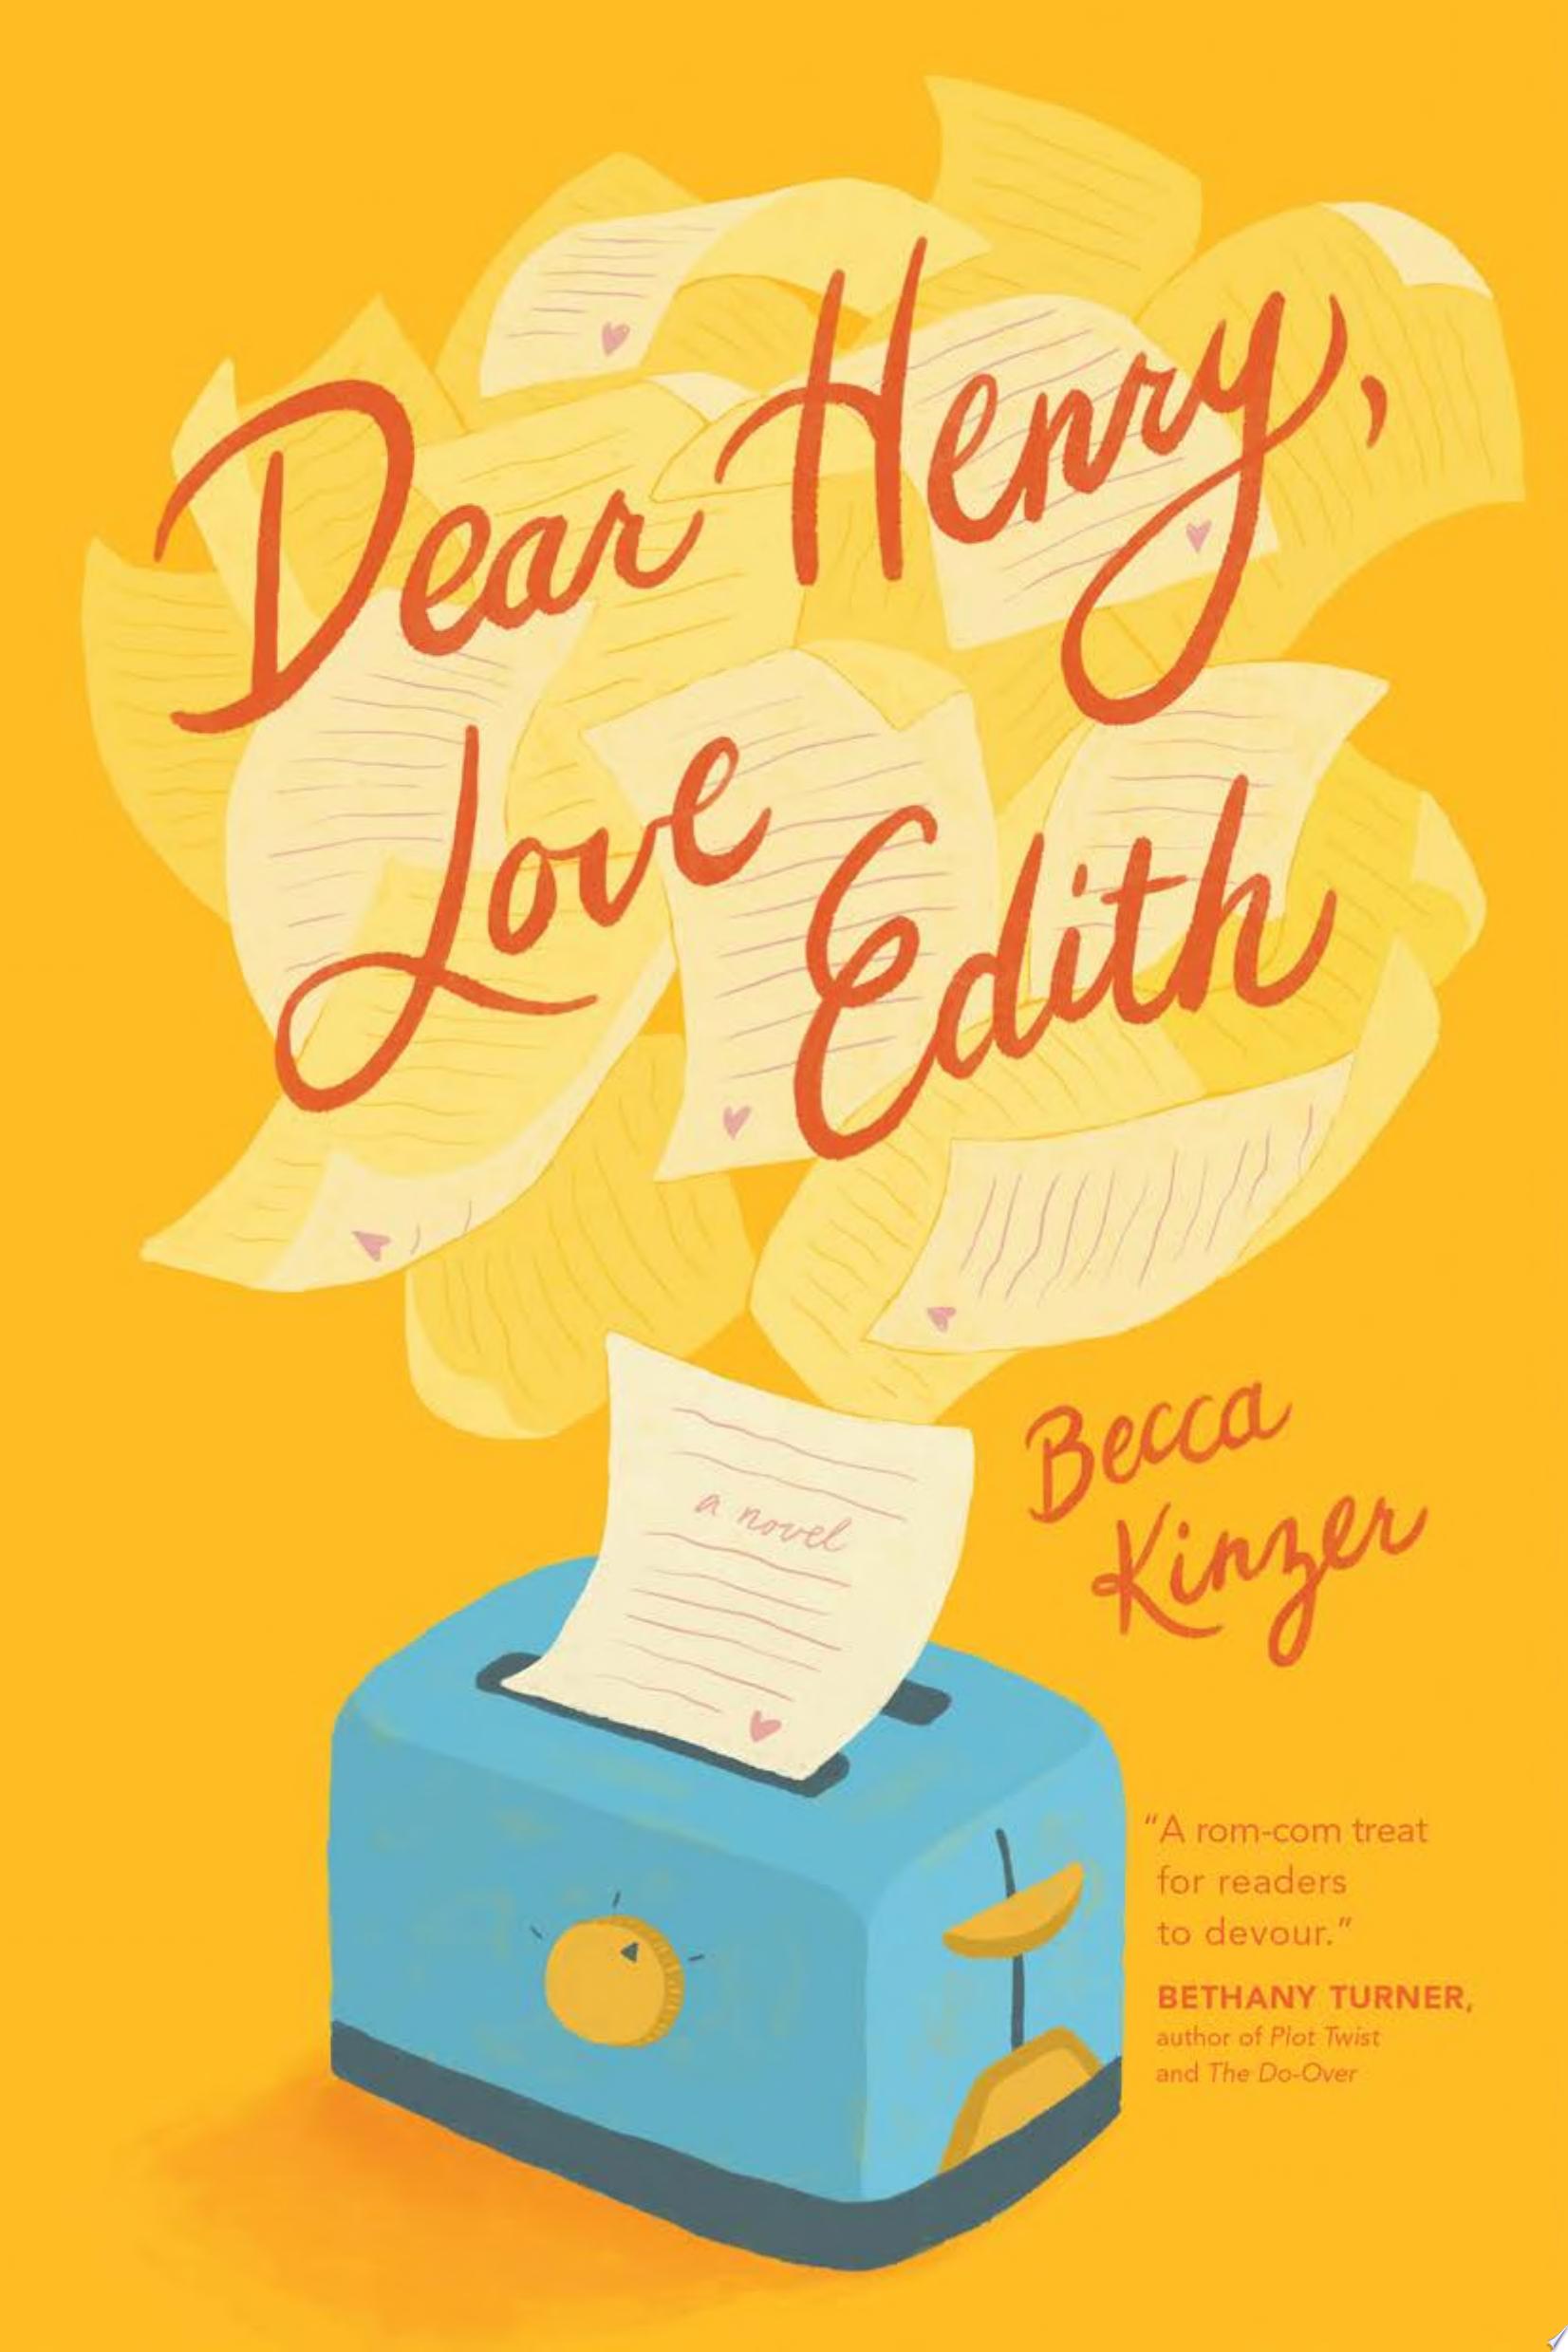 Image for "Dear Henry, Love Edith"